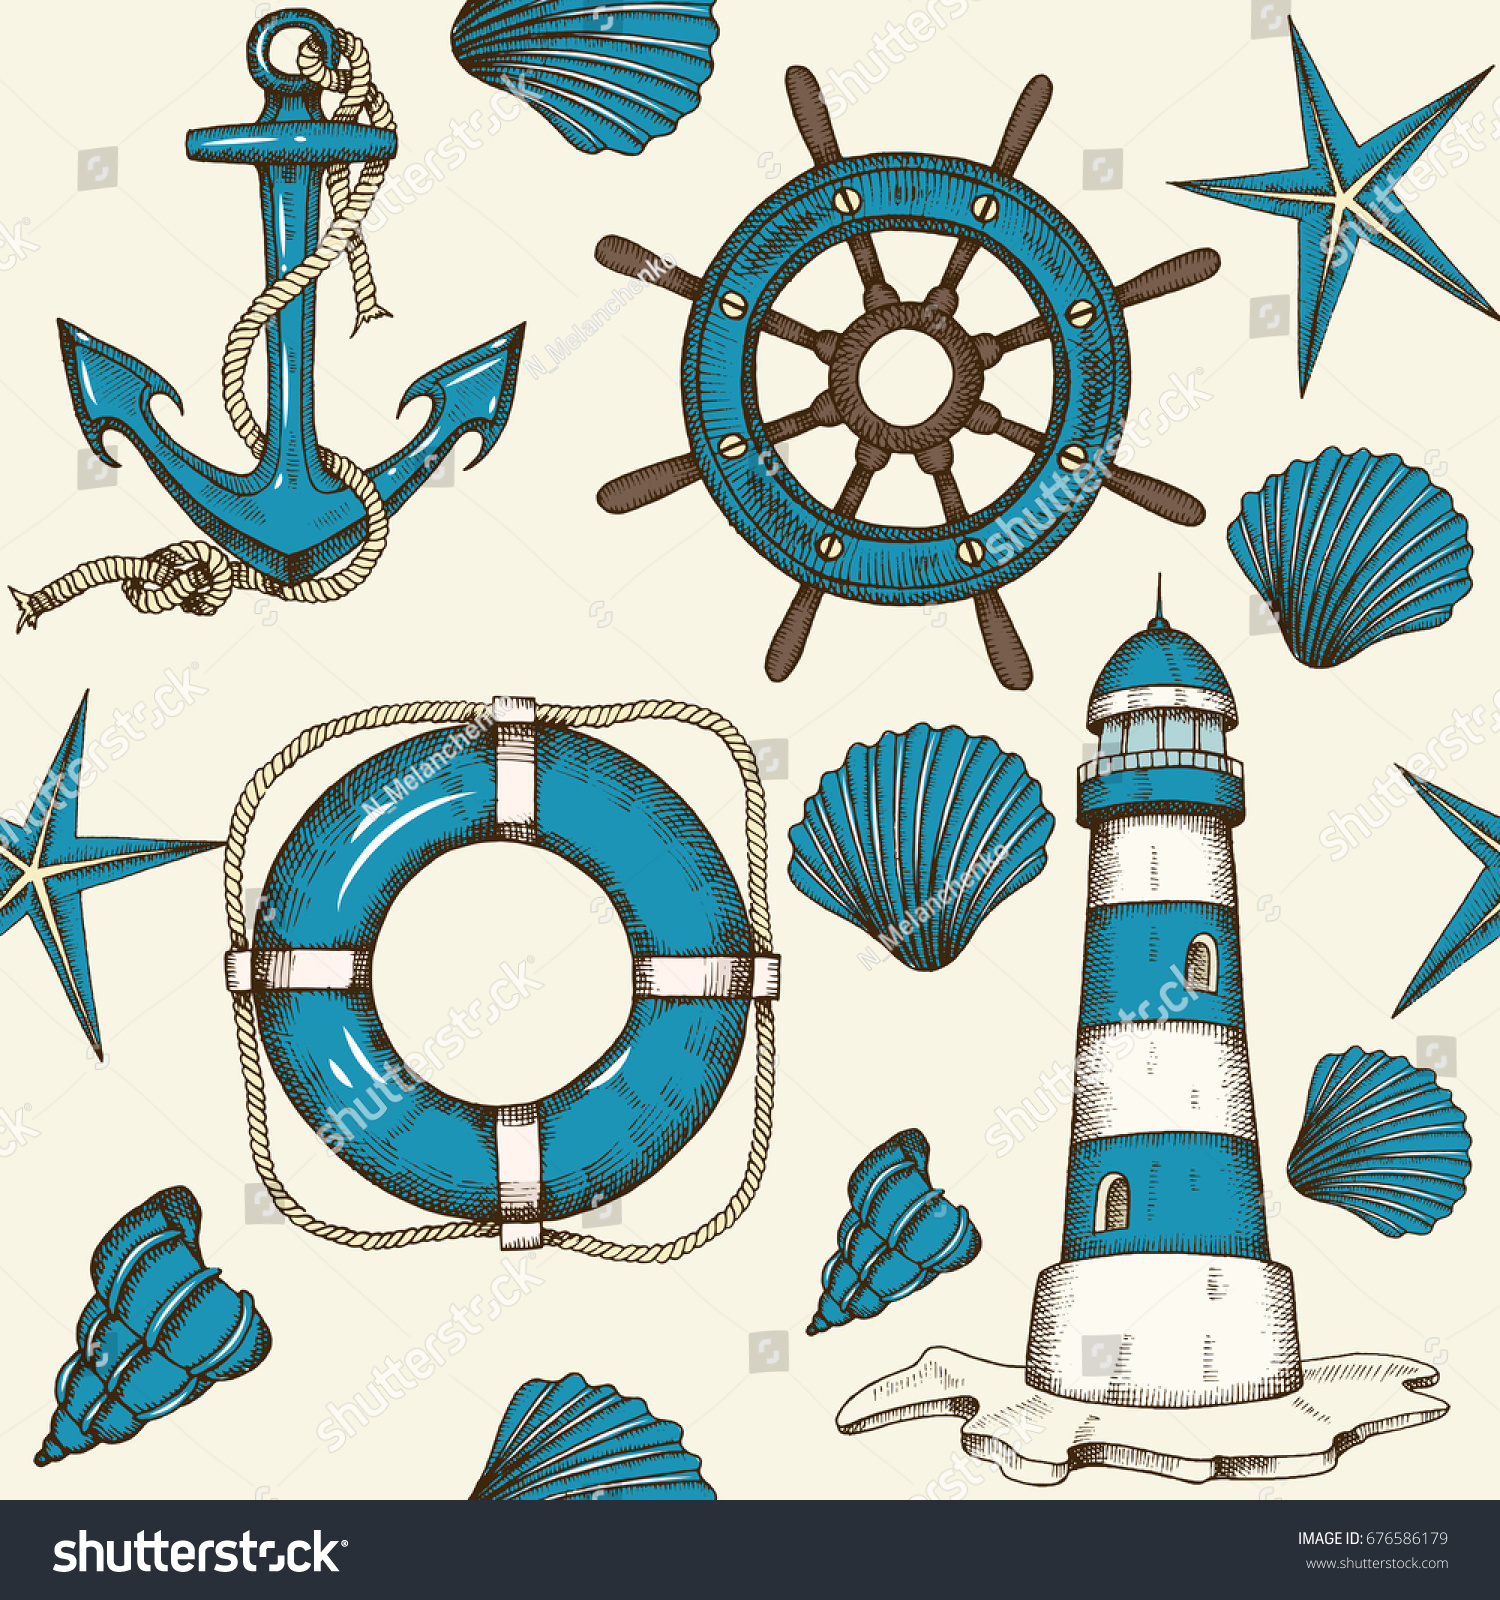 Иллюстрации на морскую тематику